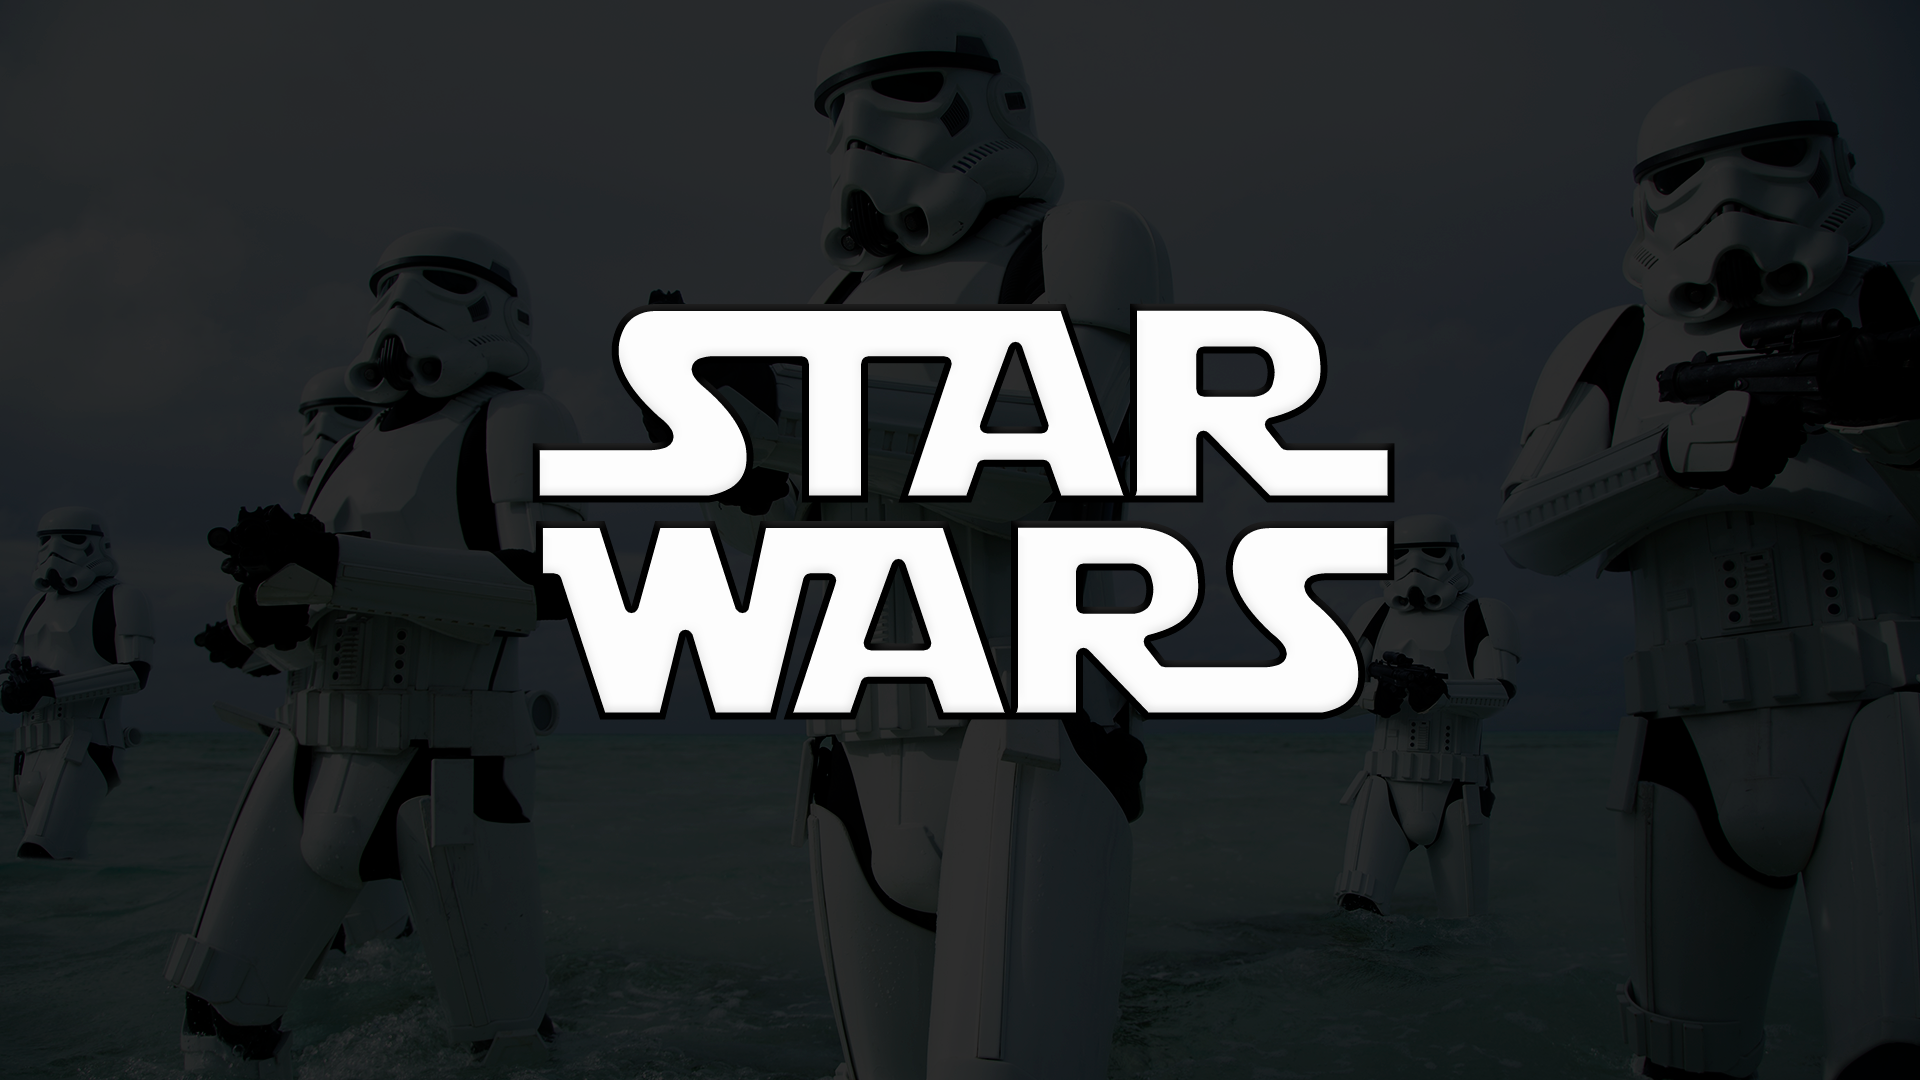 General 1920x1080 Star Wars stormtrooper dark science fiction movies